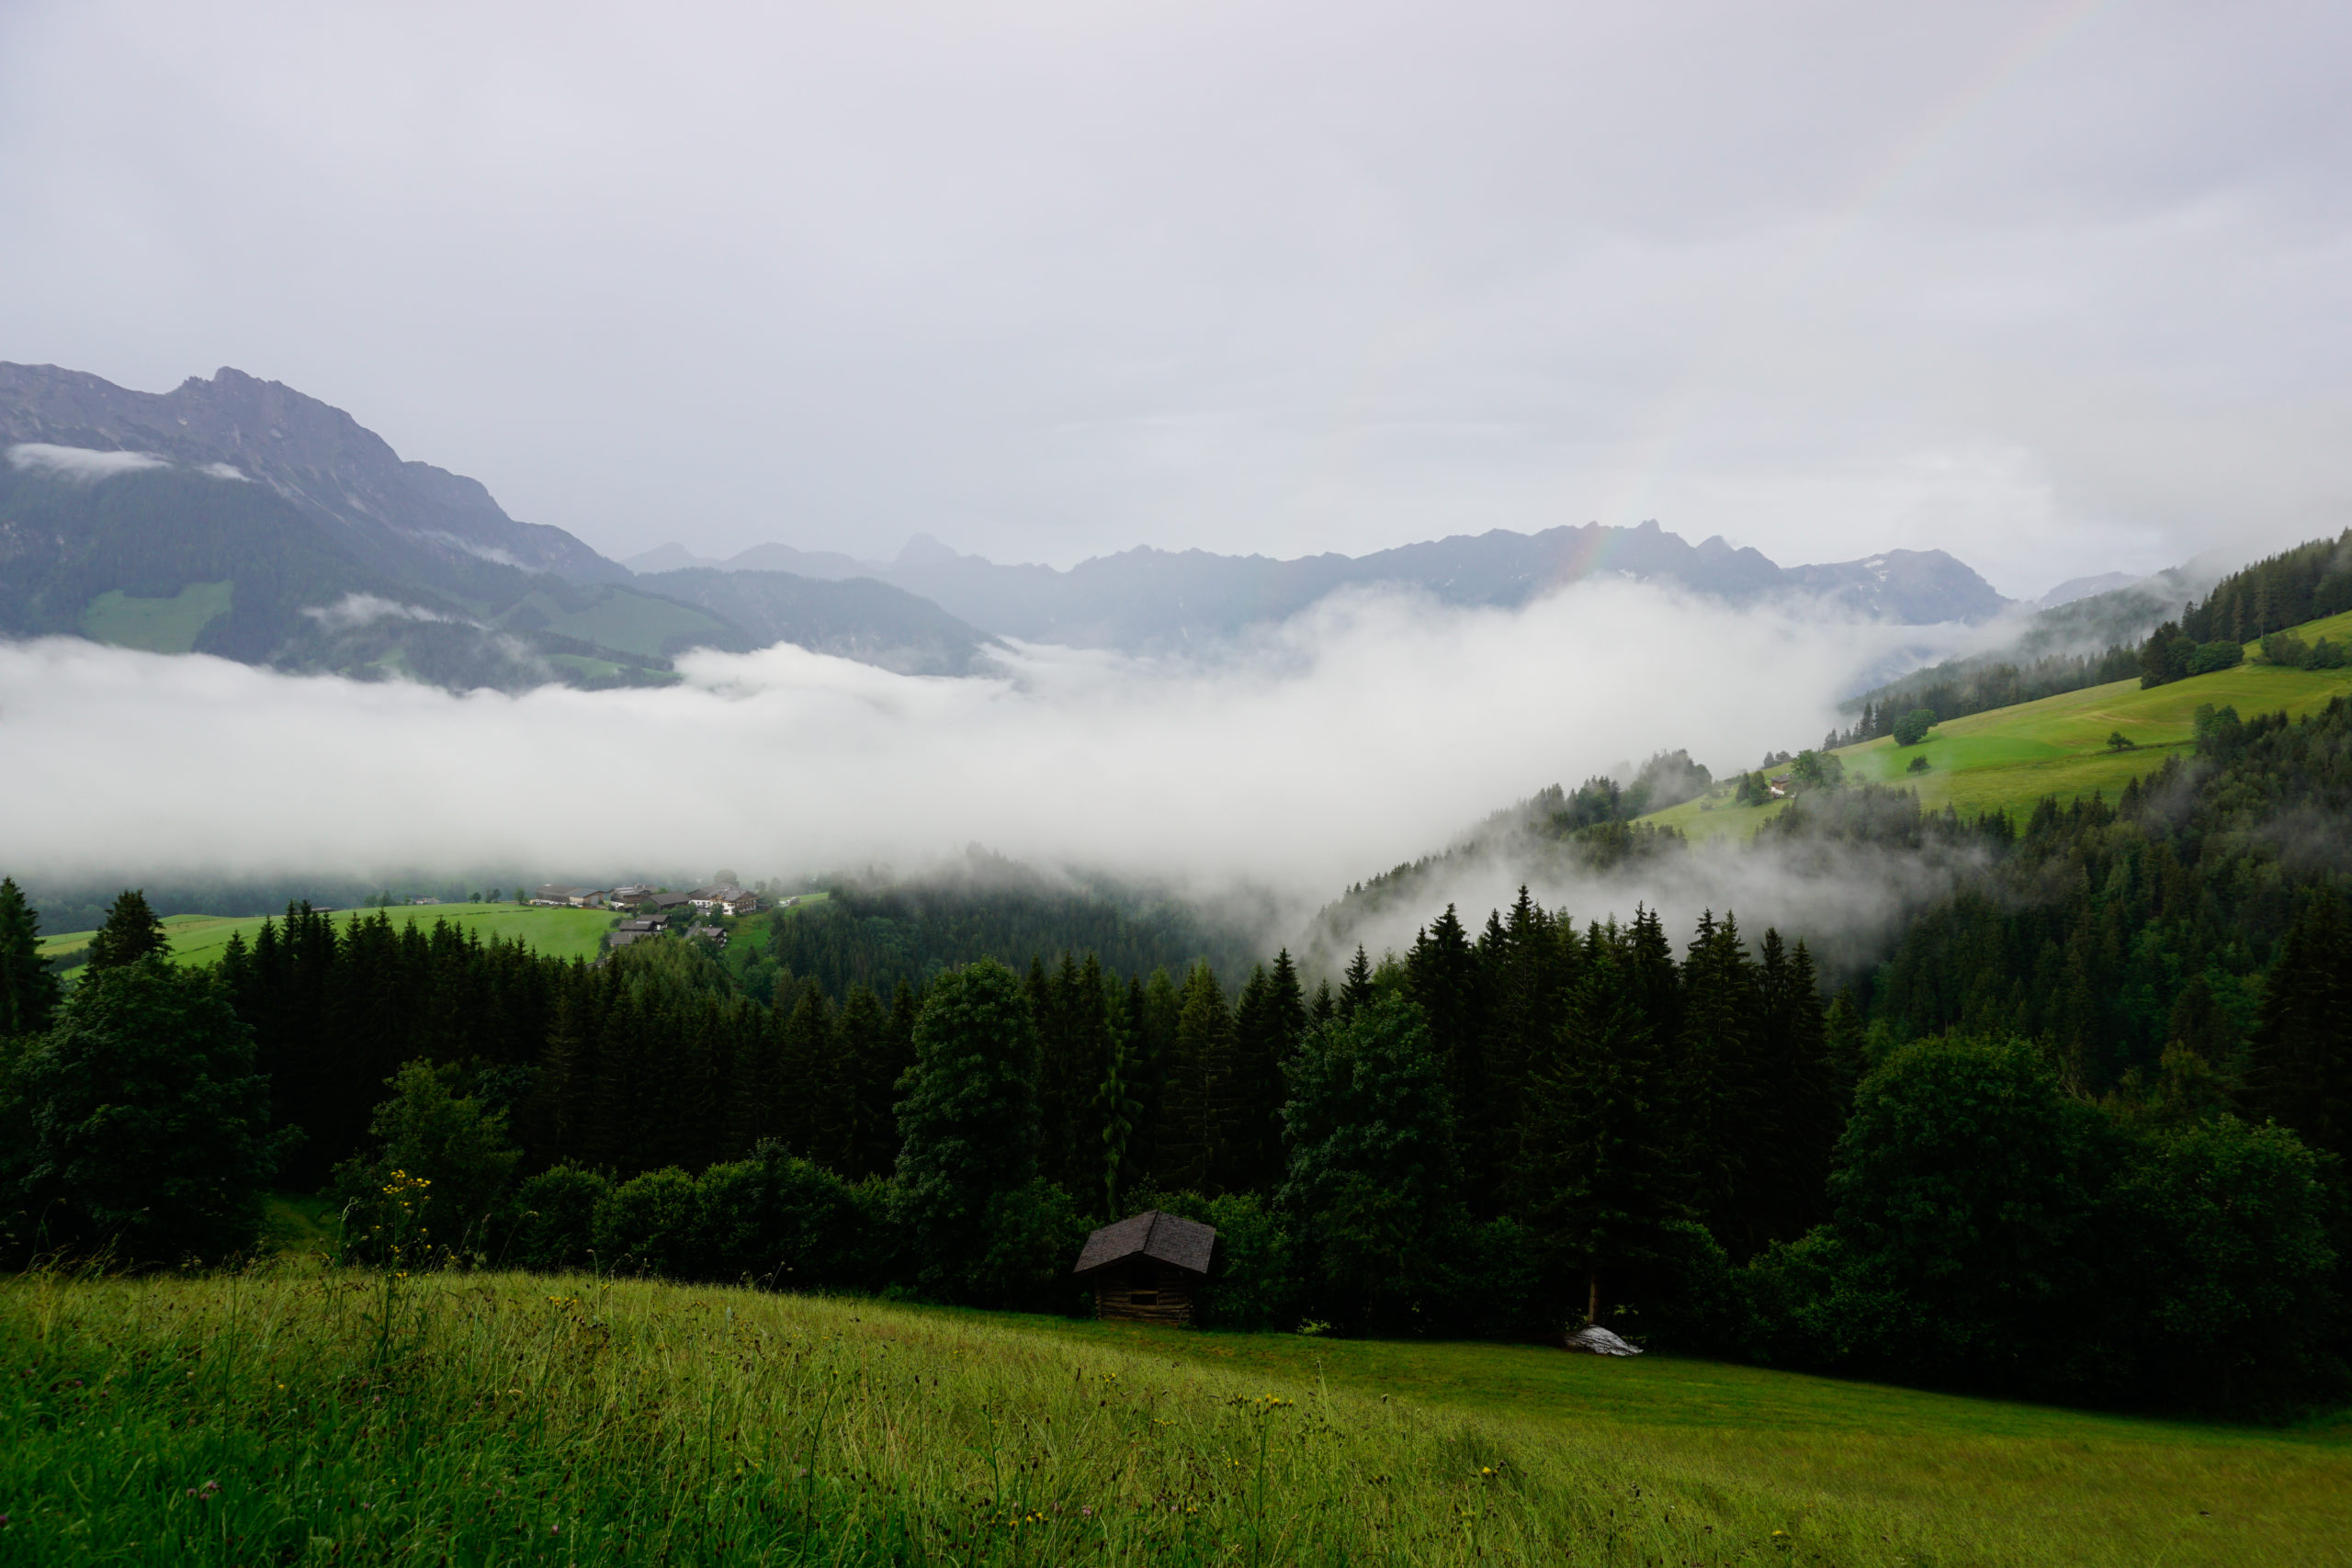 mycabin keyimages 04 scaled - Schwarzwald Tourismus kooperiert mit MyCabin.eu